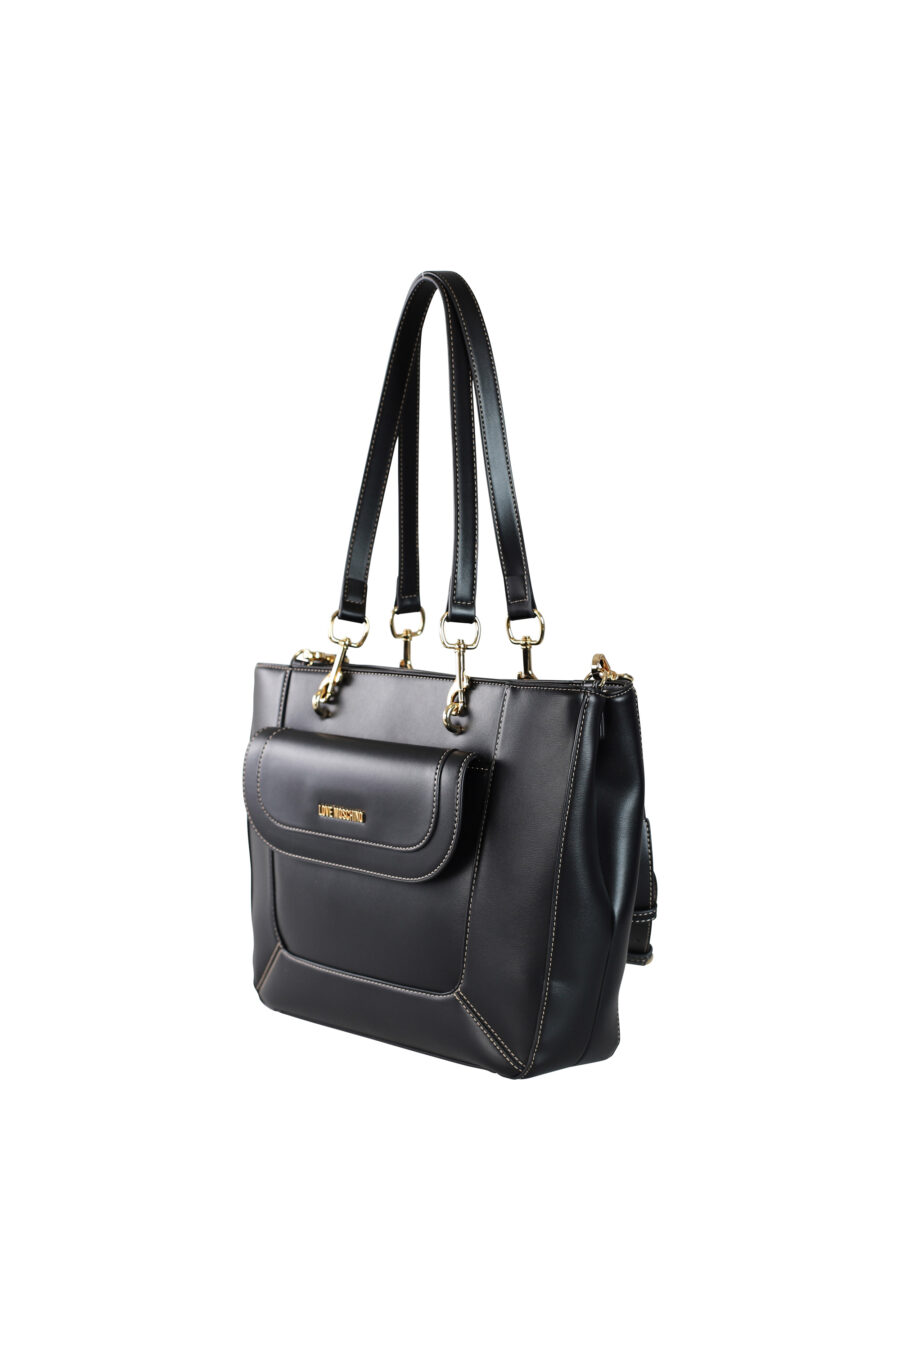 Black shopper bag with front pocket and mini logo - 8059965779126 2